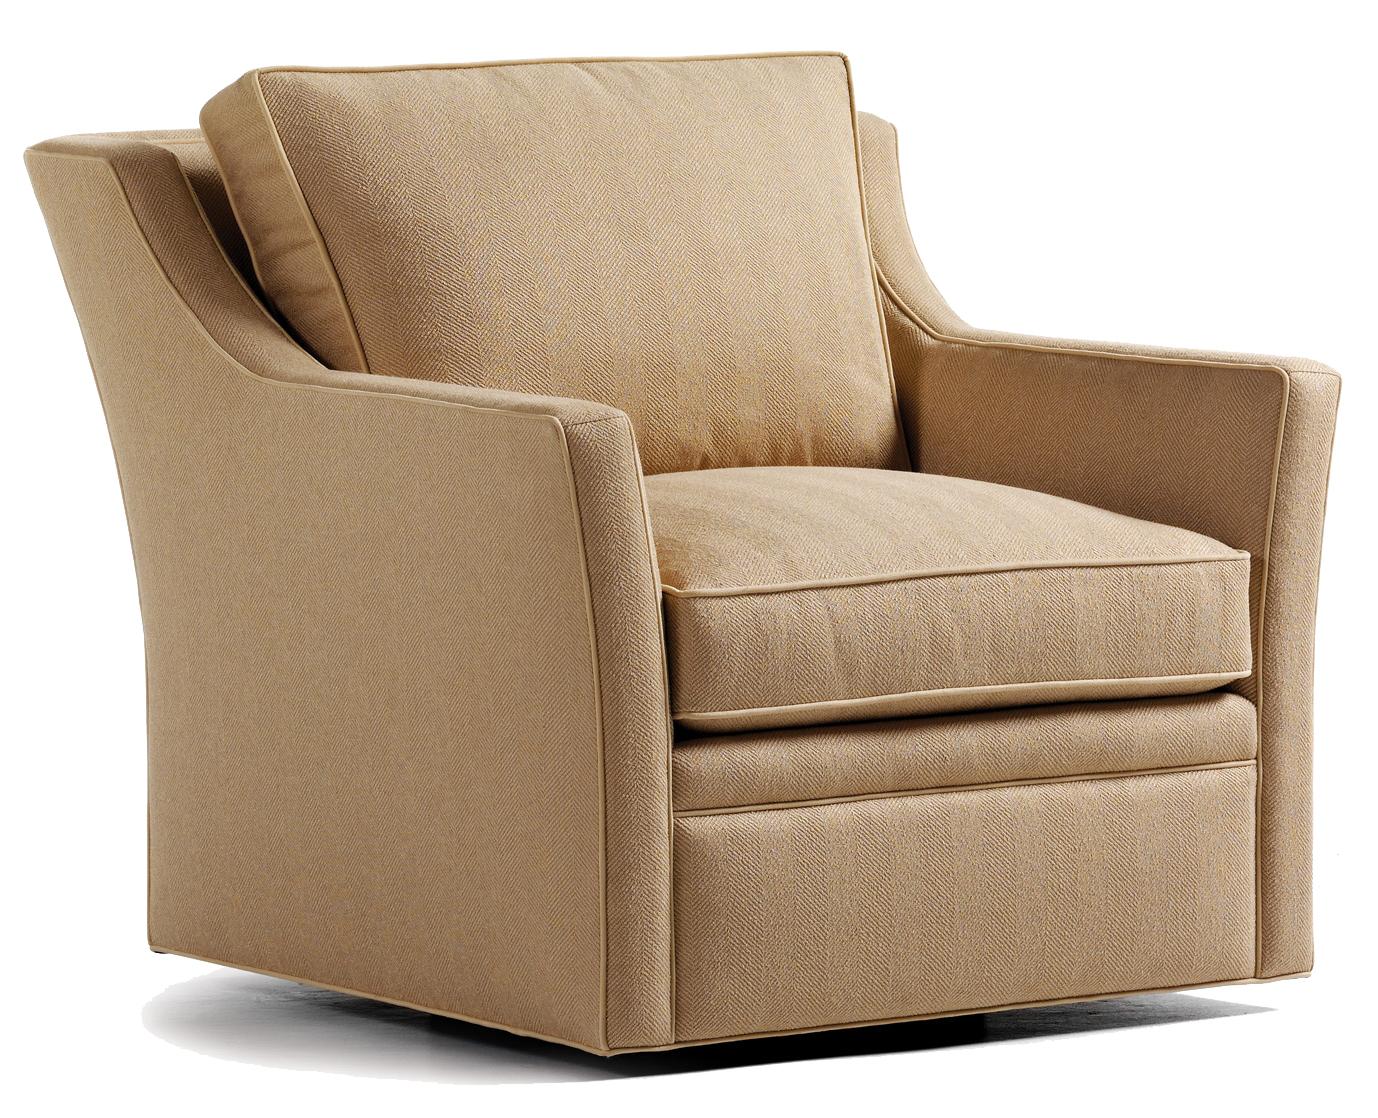 Halston Upholstered Swivel Chair   